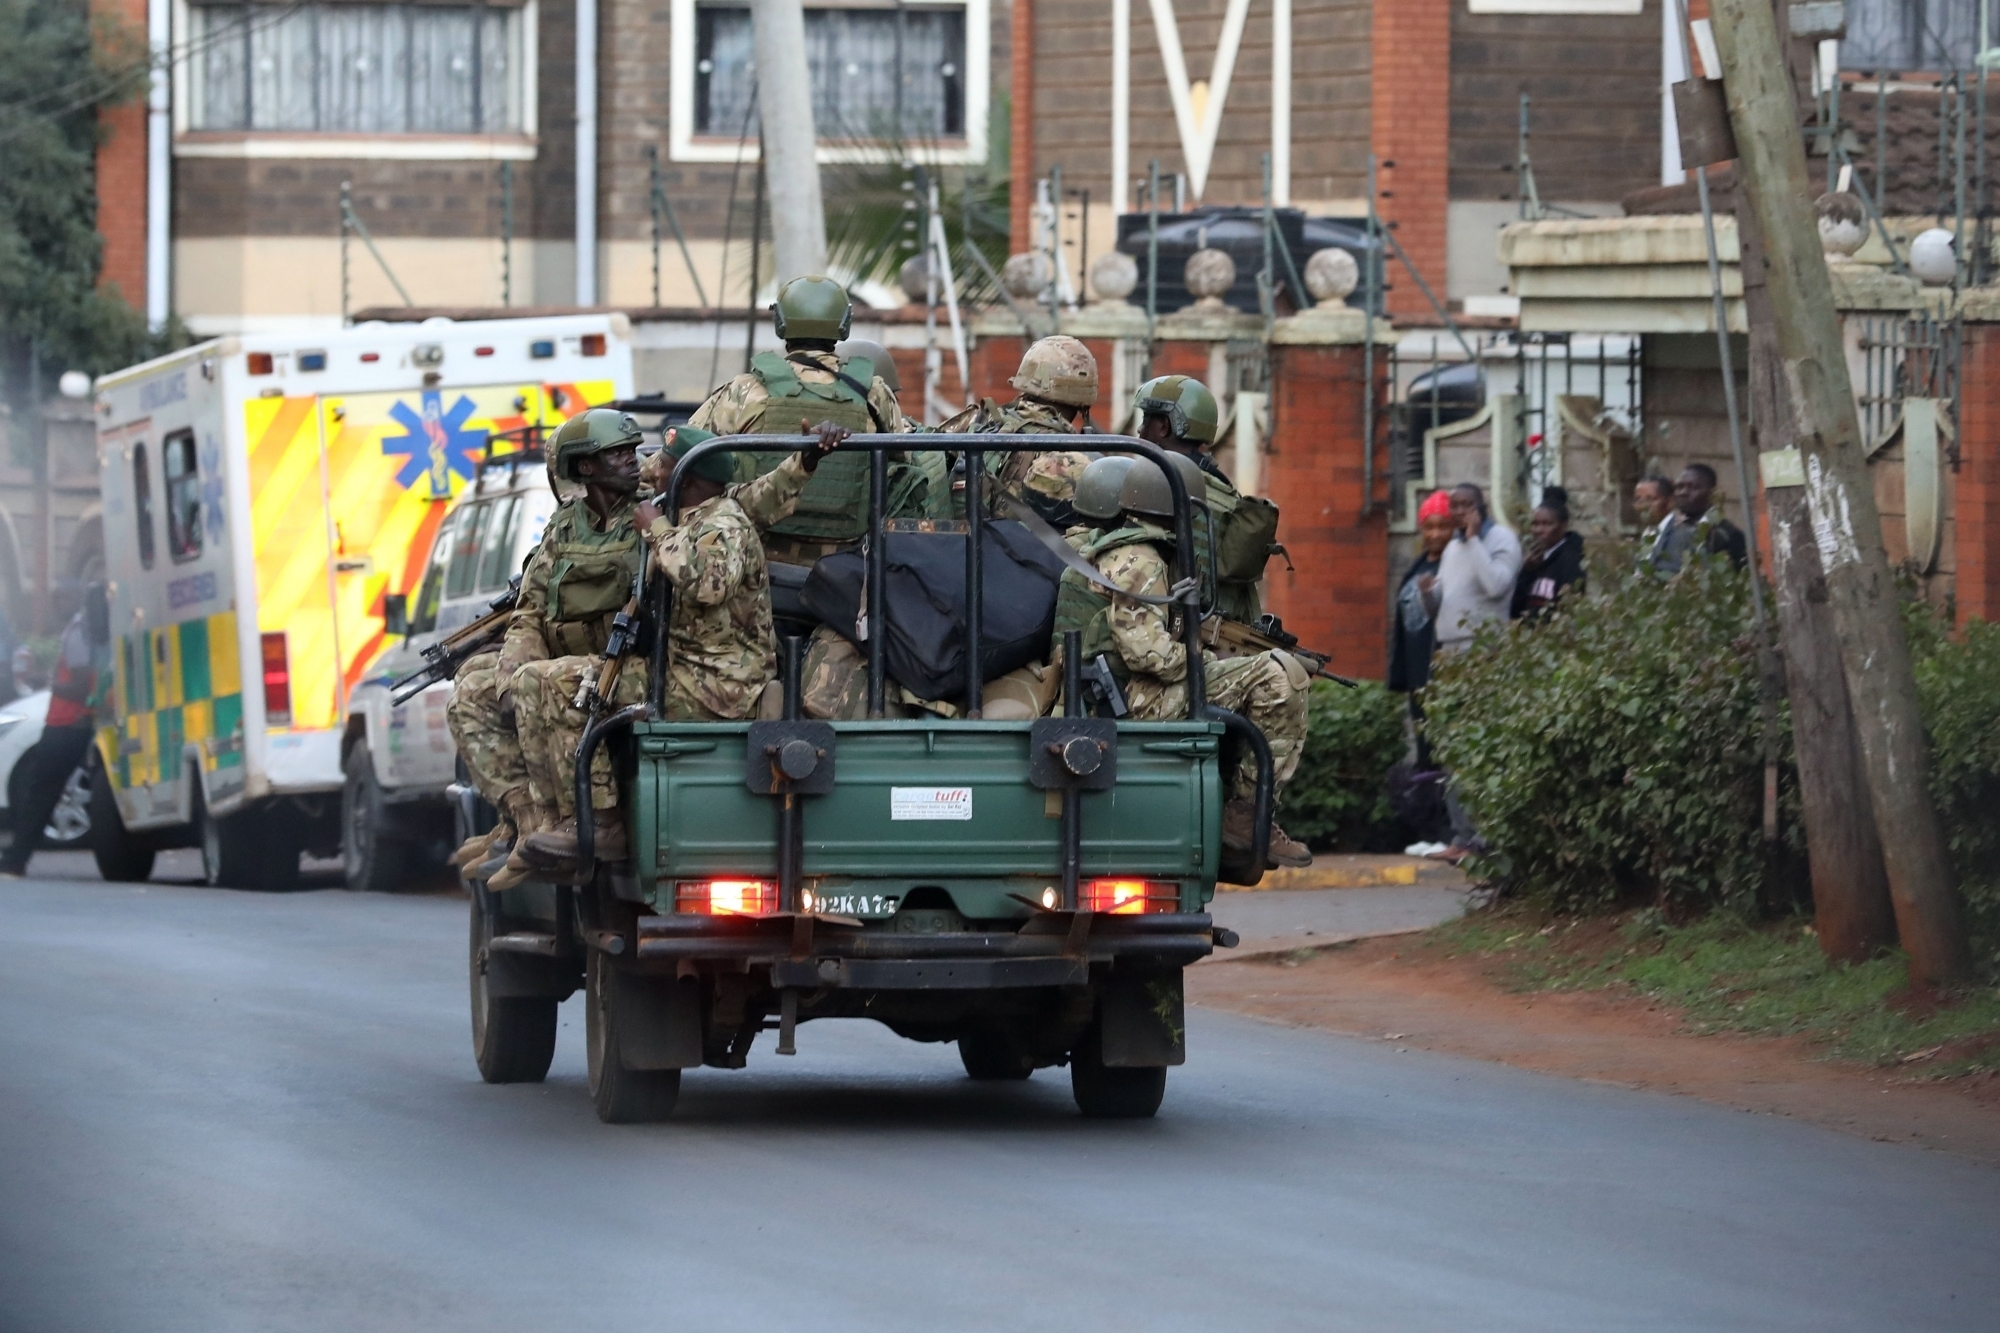 Somali jihadists attack military base in Kenya